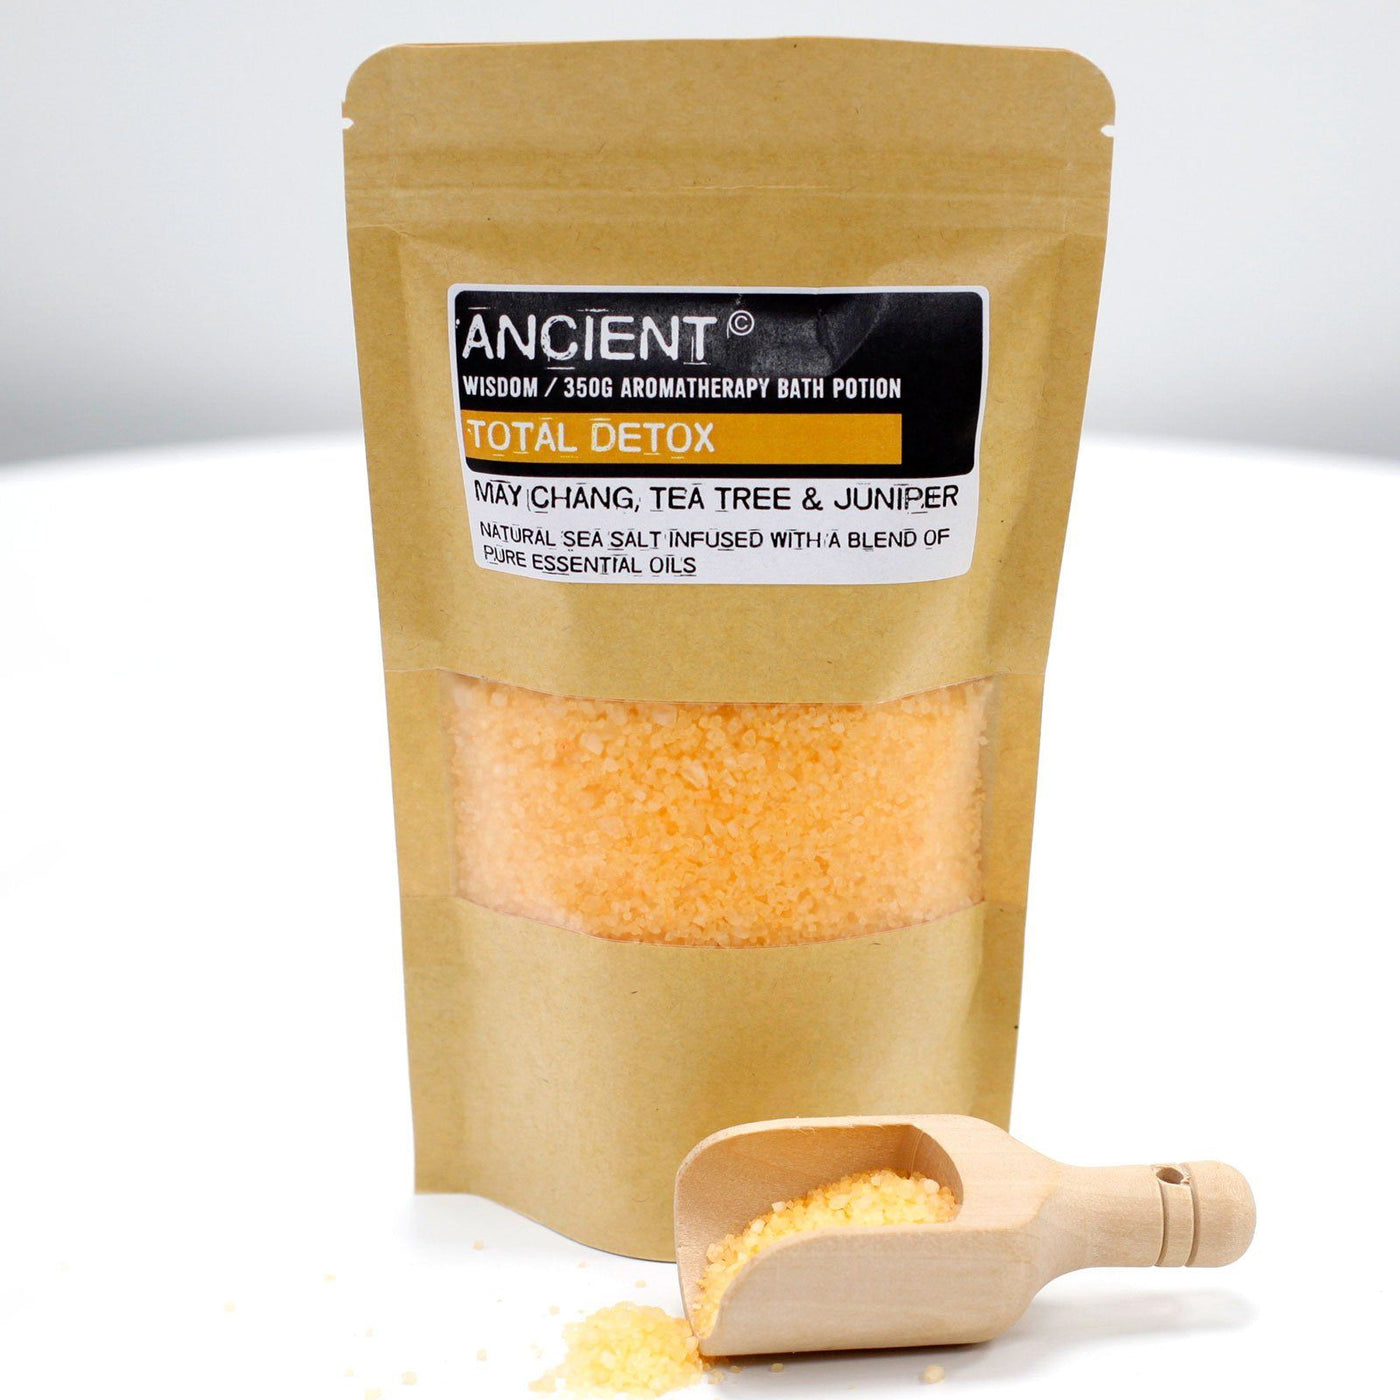 Aromatherapy Essential Oils & Sea Salt Bath Potion in Kraft Bag 350g Total Detox.